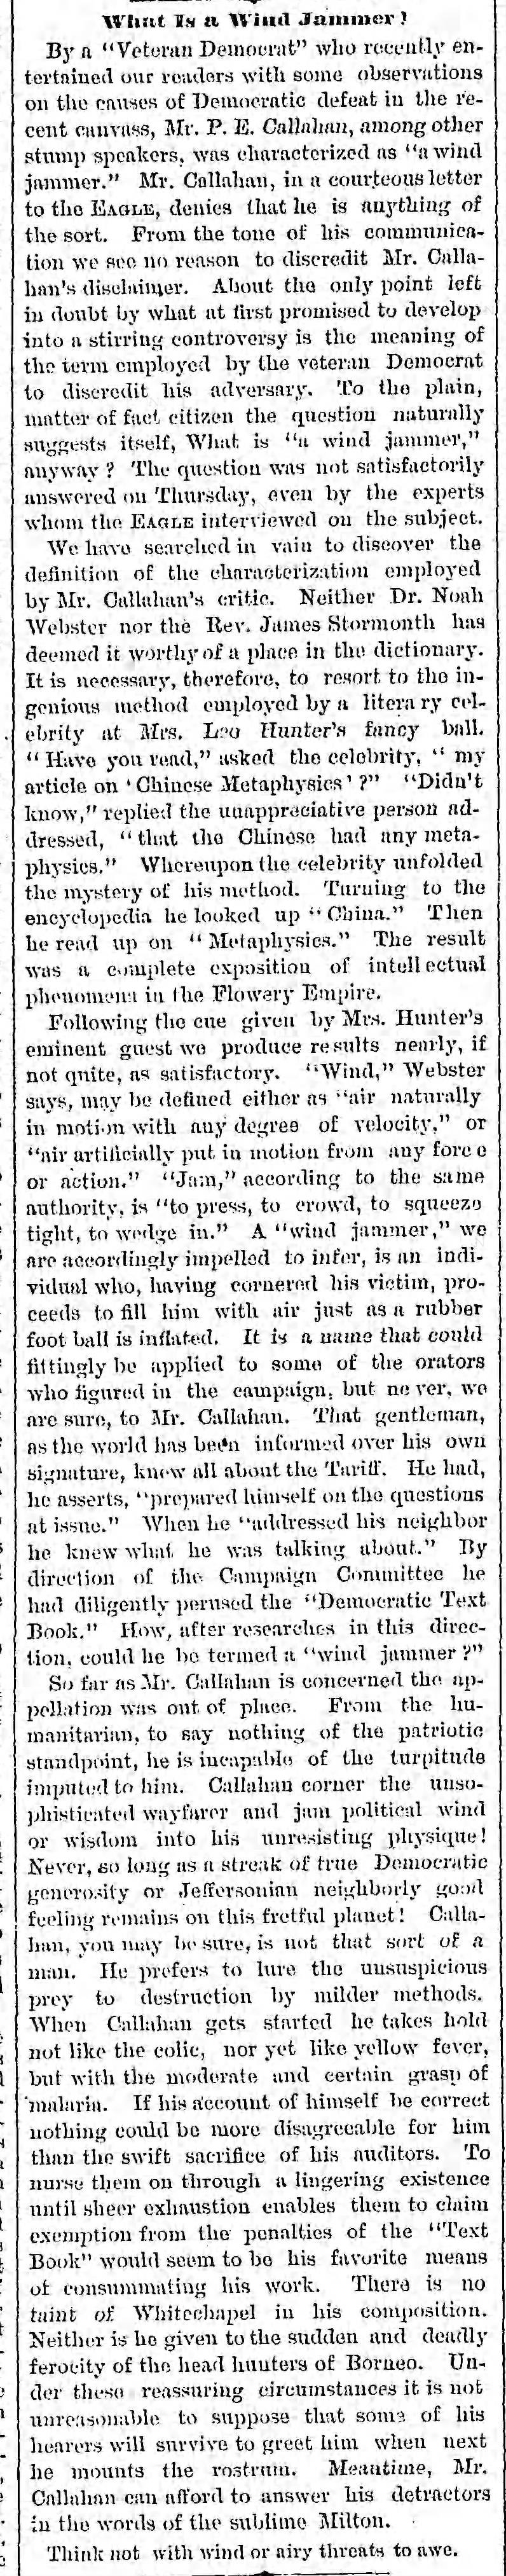 Patrick E. Callahan -- not a windjammer!